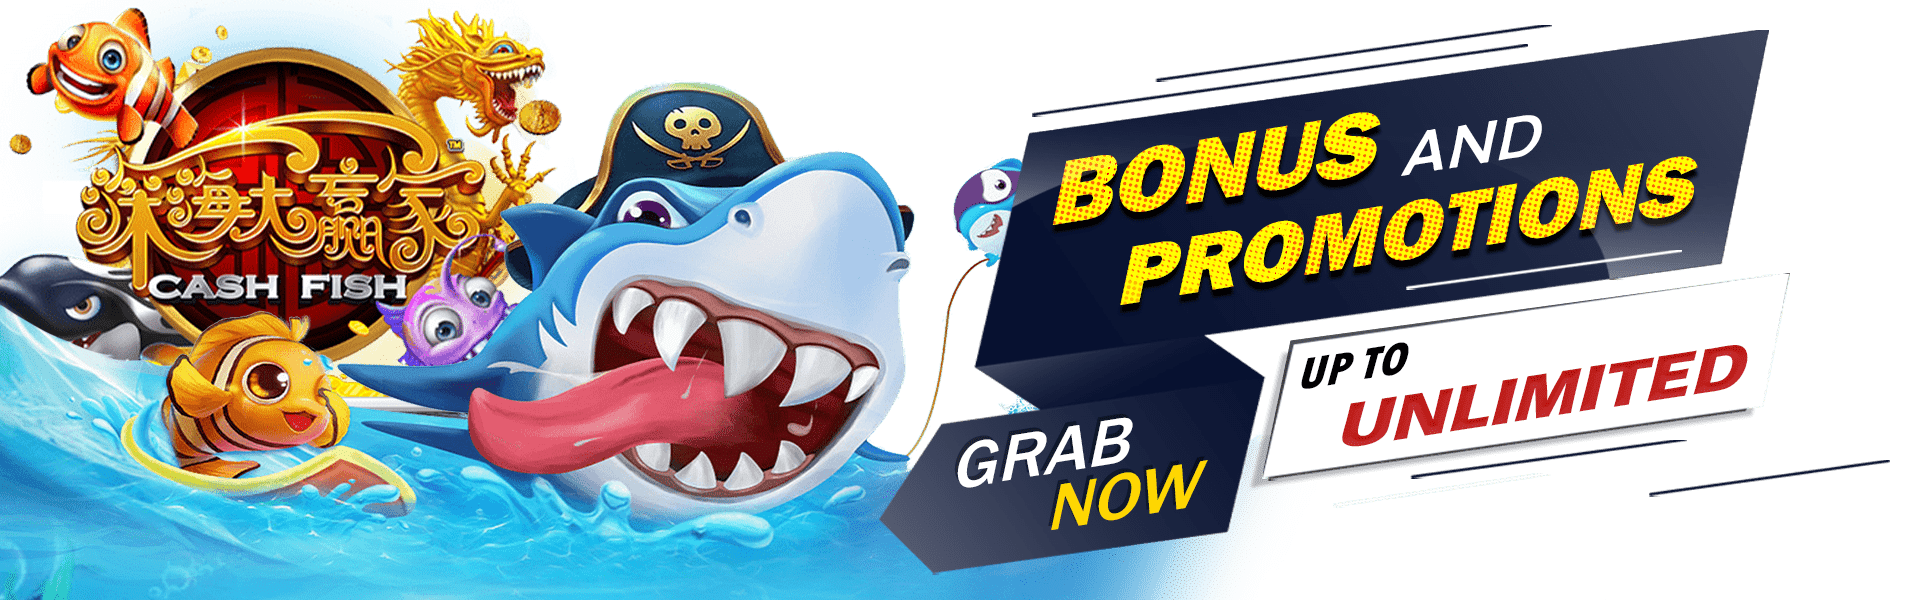 cash fish bonus and promotion banner